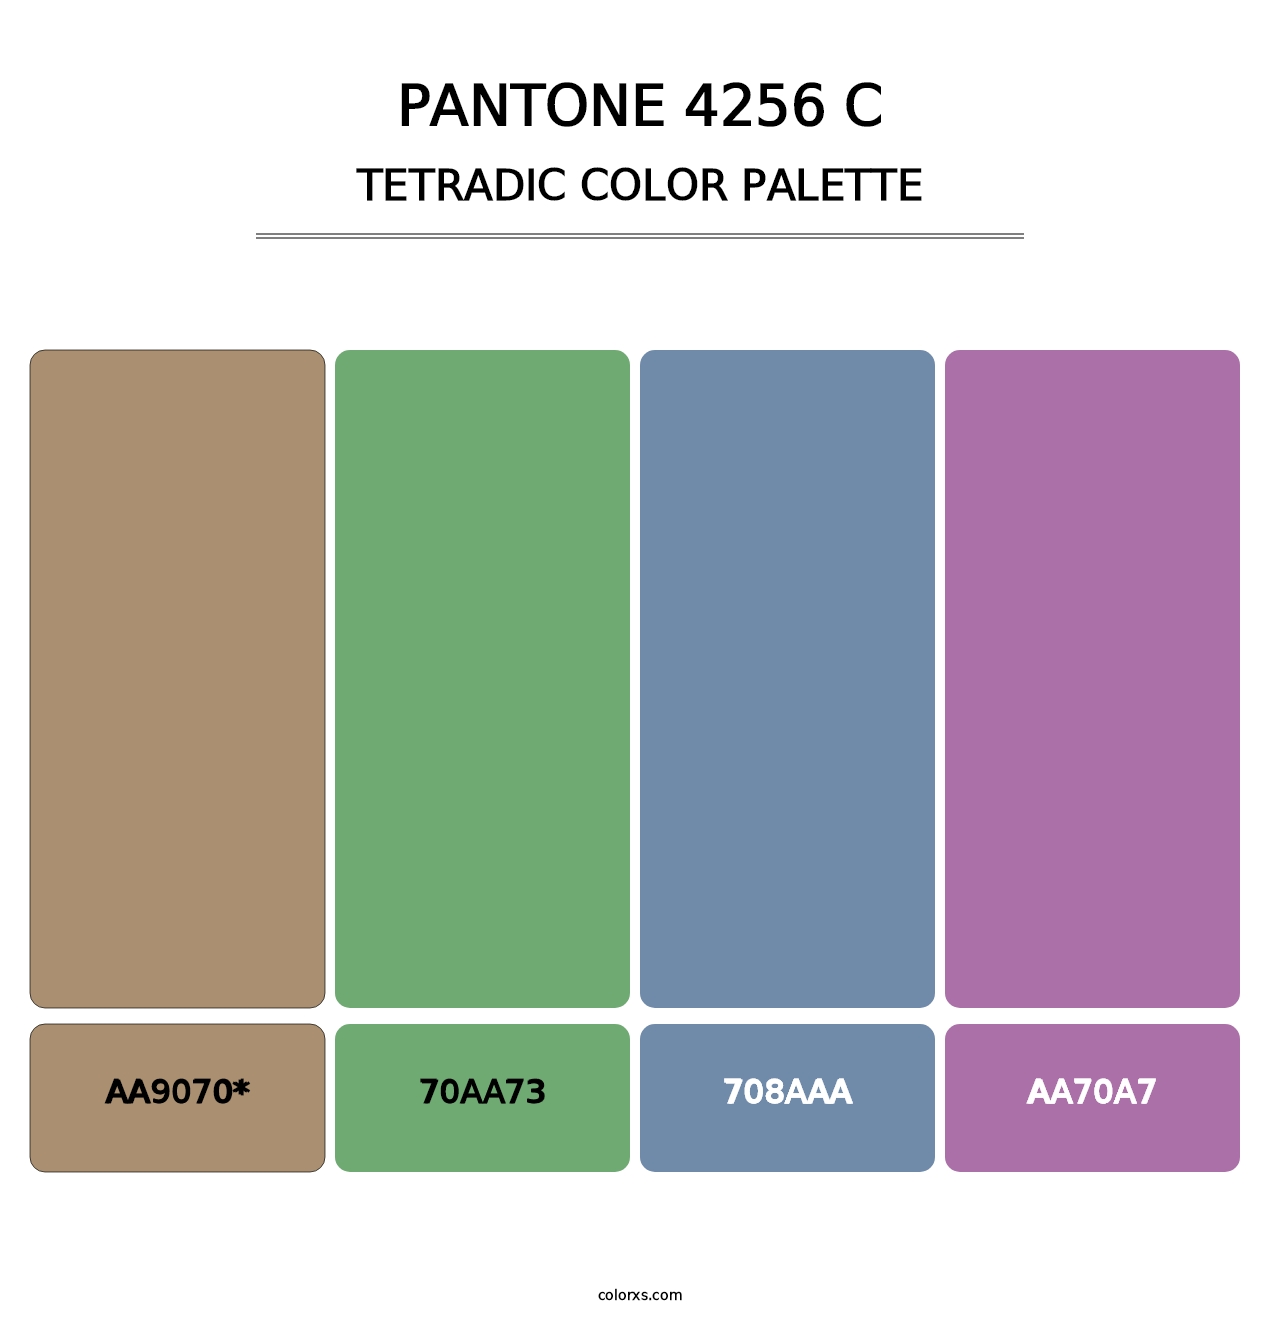 PANTONE 4256 C - Tetradic Color Palette